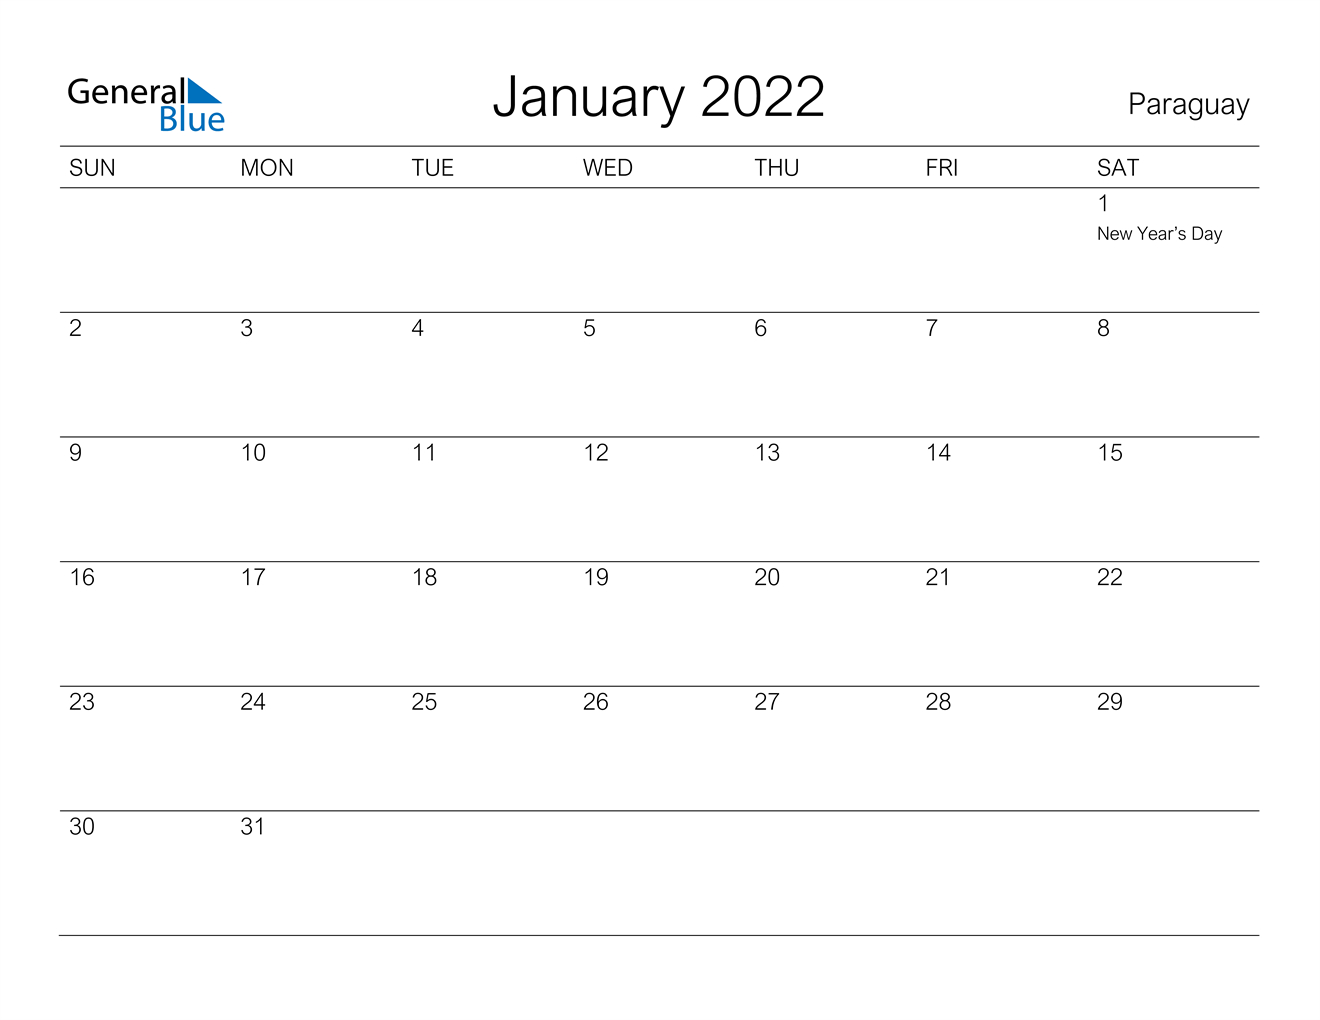 January 2022 Calendar - Paraguay